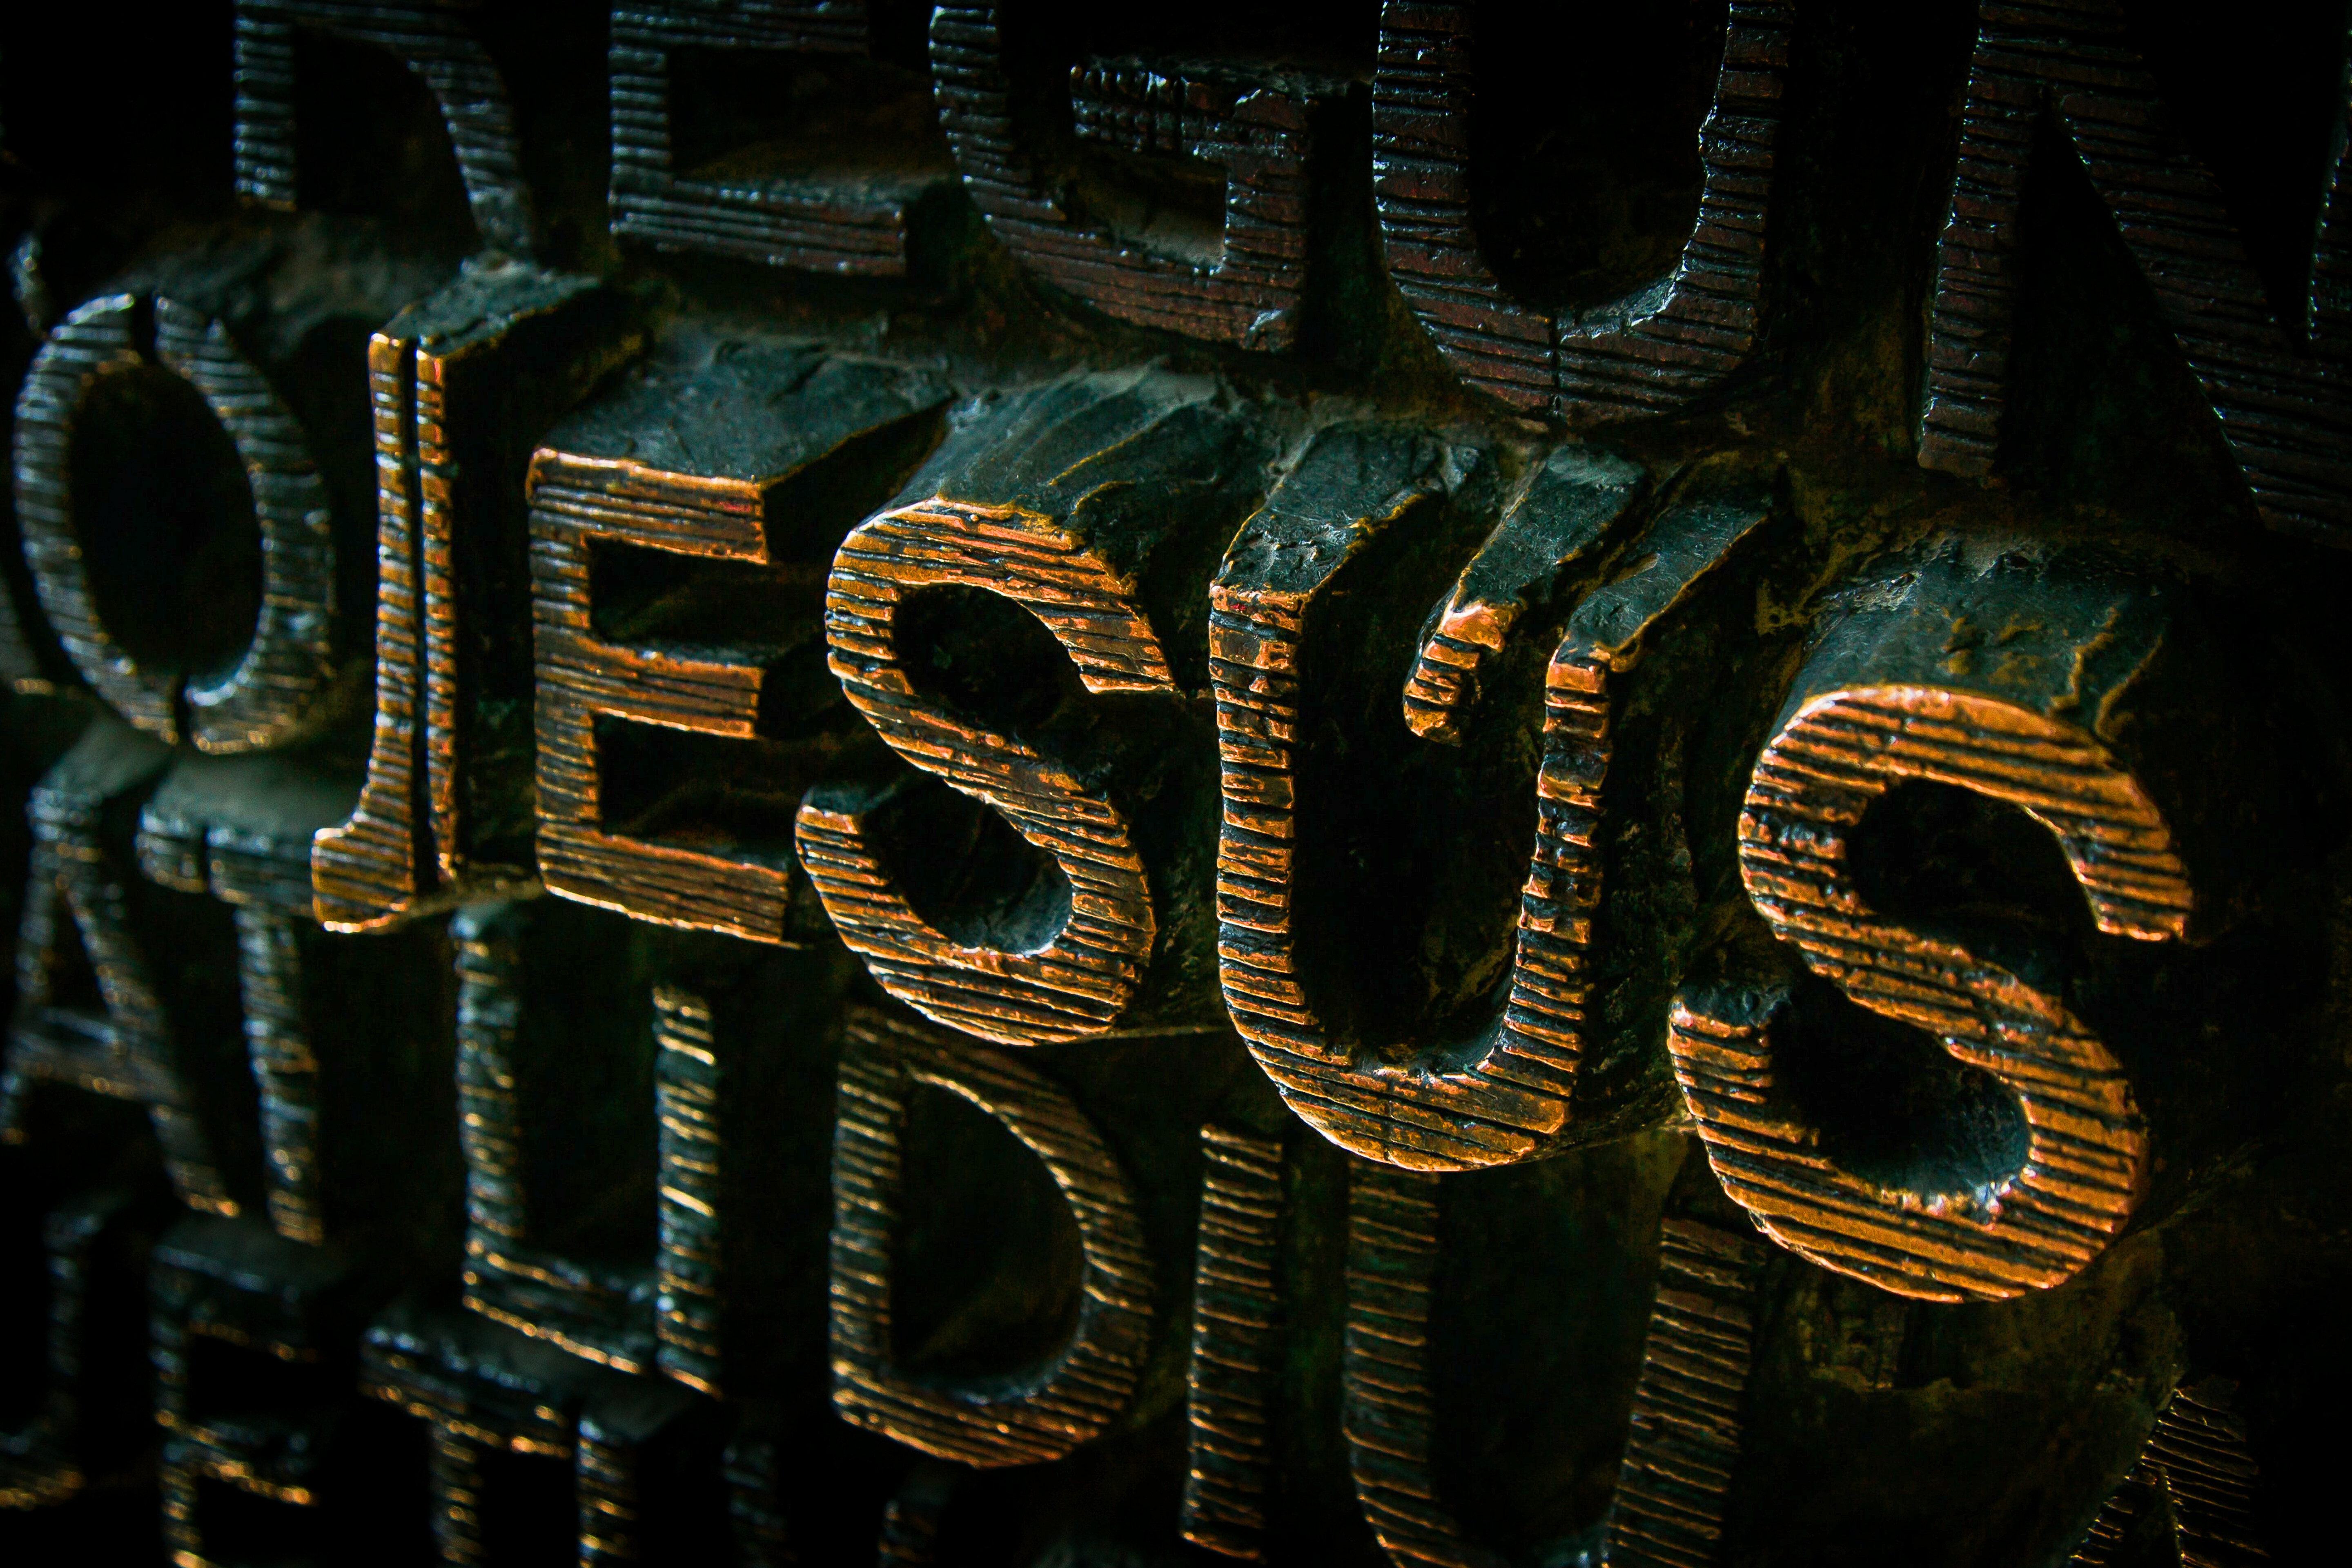 It’s about Jesus